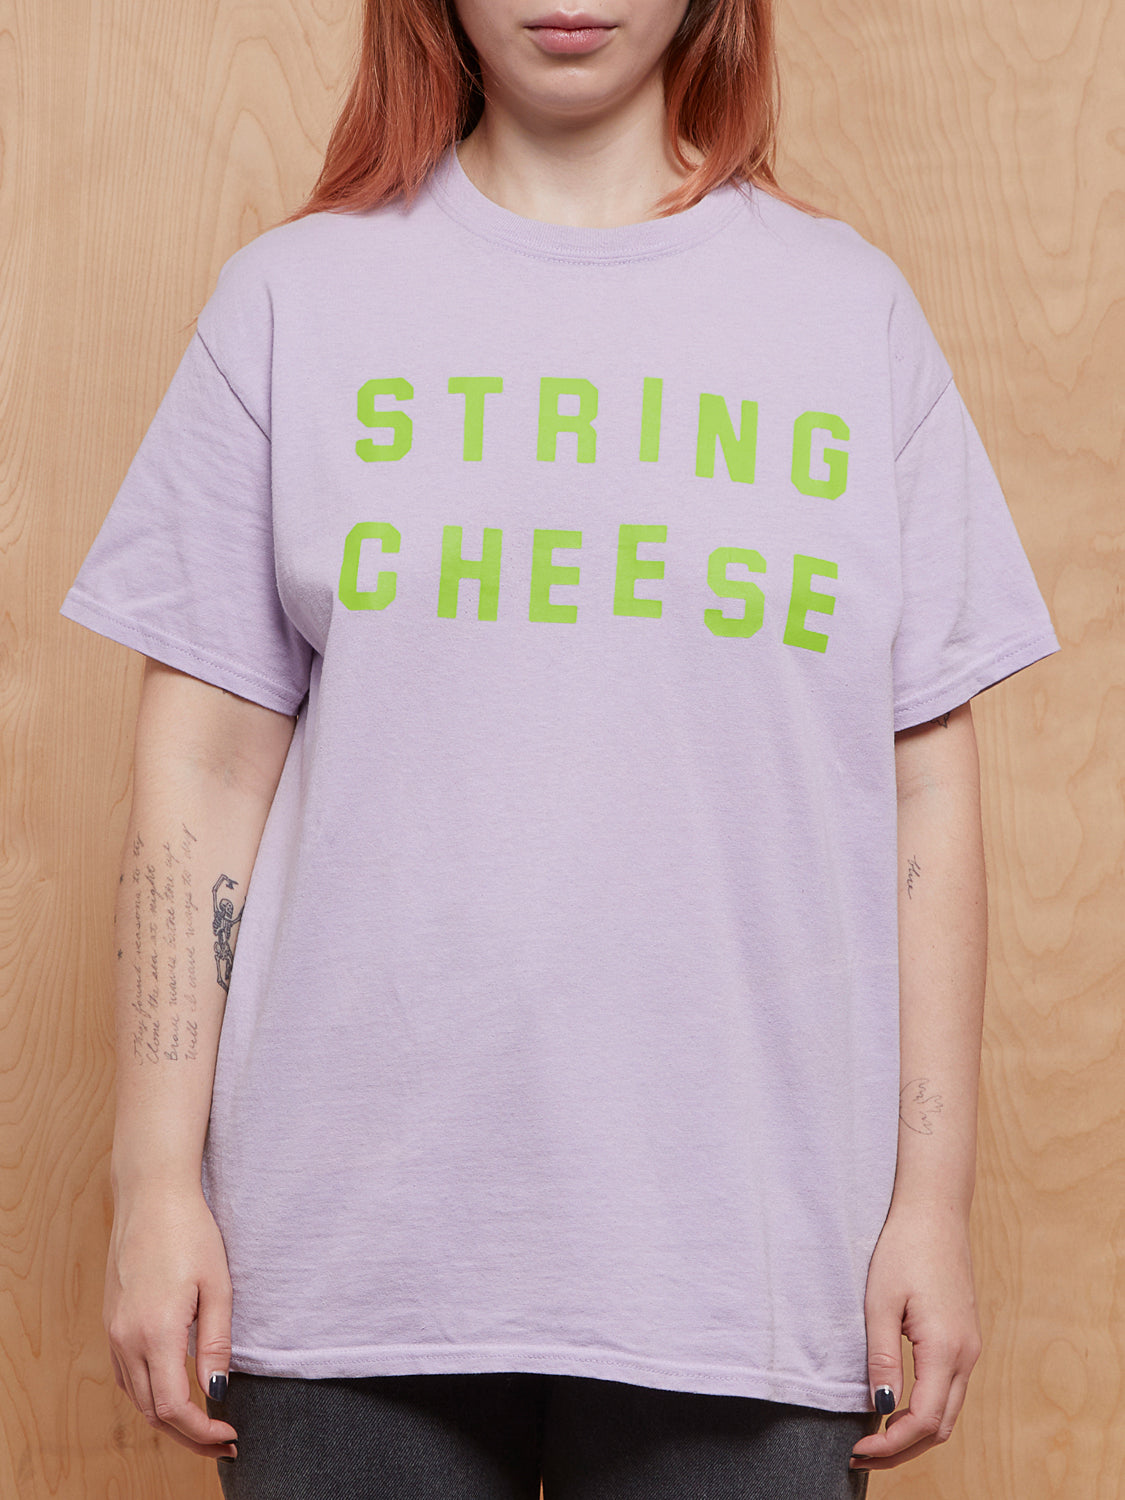 String Cheese T-shirt